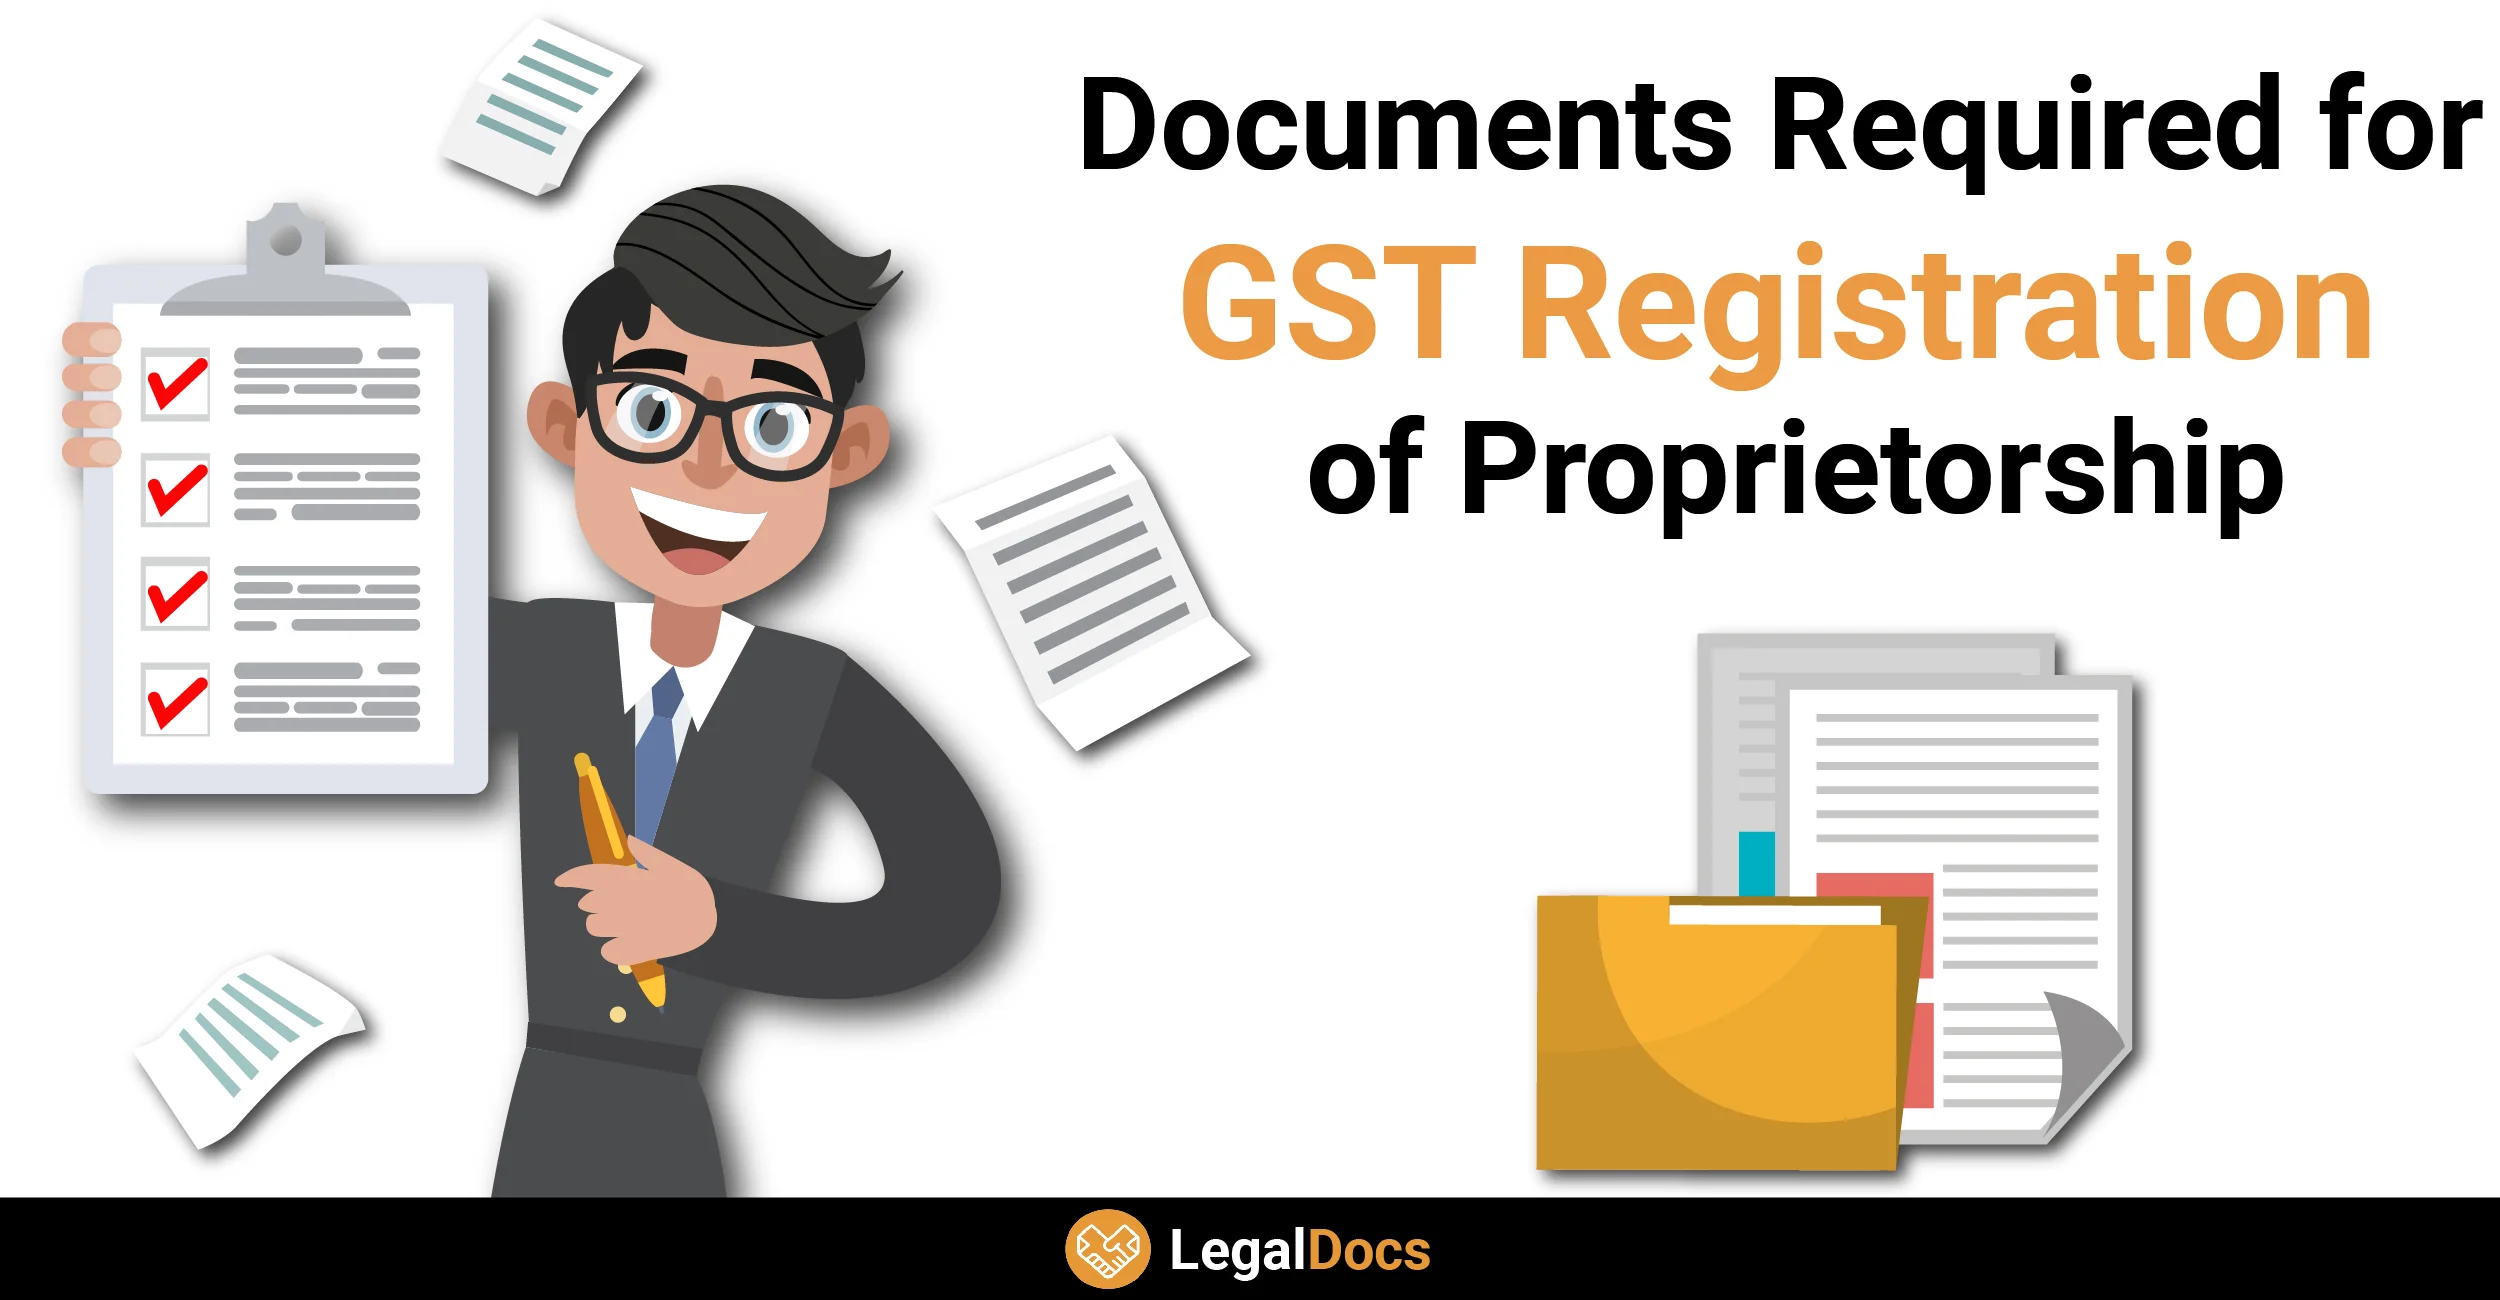 Documents Required for GST Registration of Proprietorship - LegalDocs